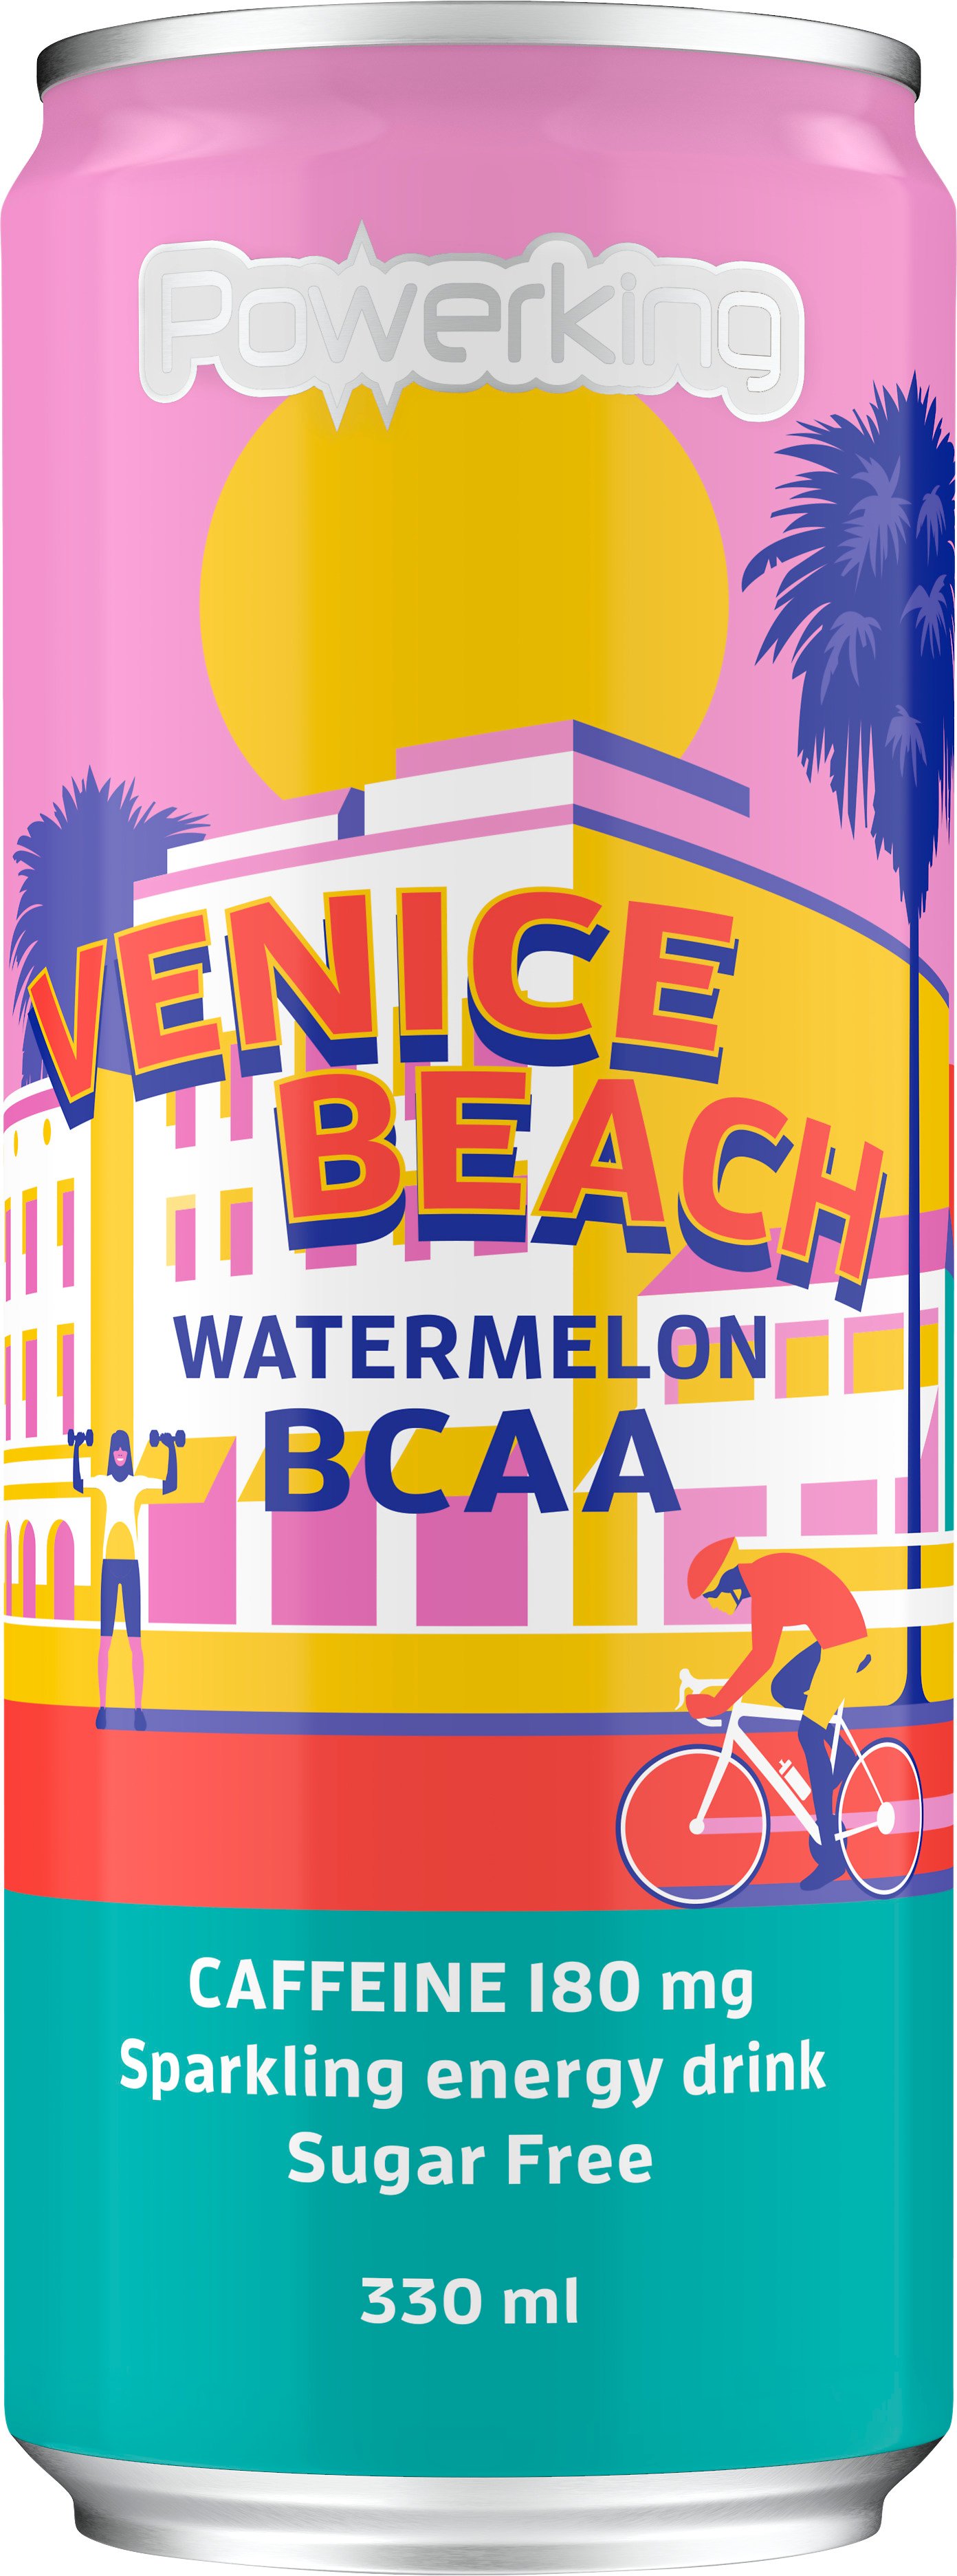 Powerking Venice Beach Watermelon BCAA dryck 330 ml